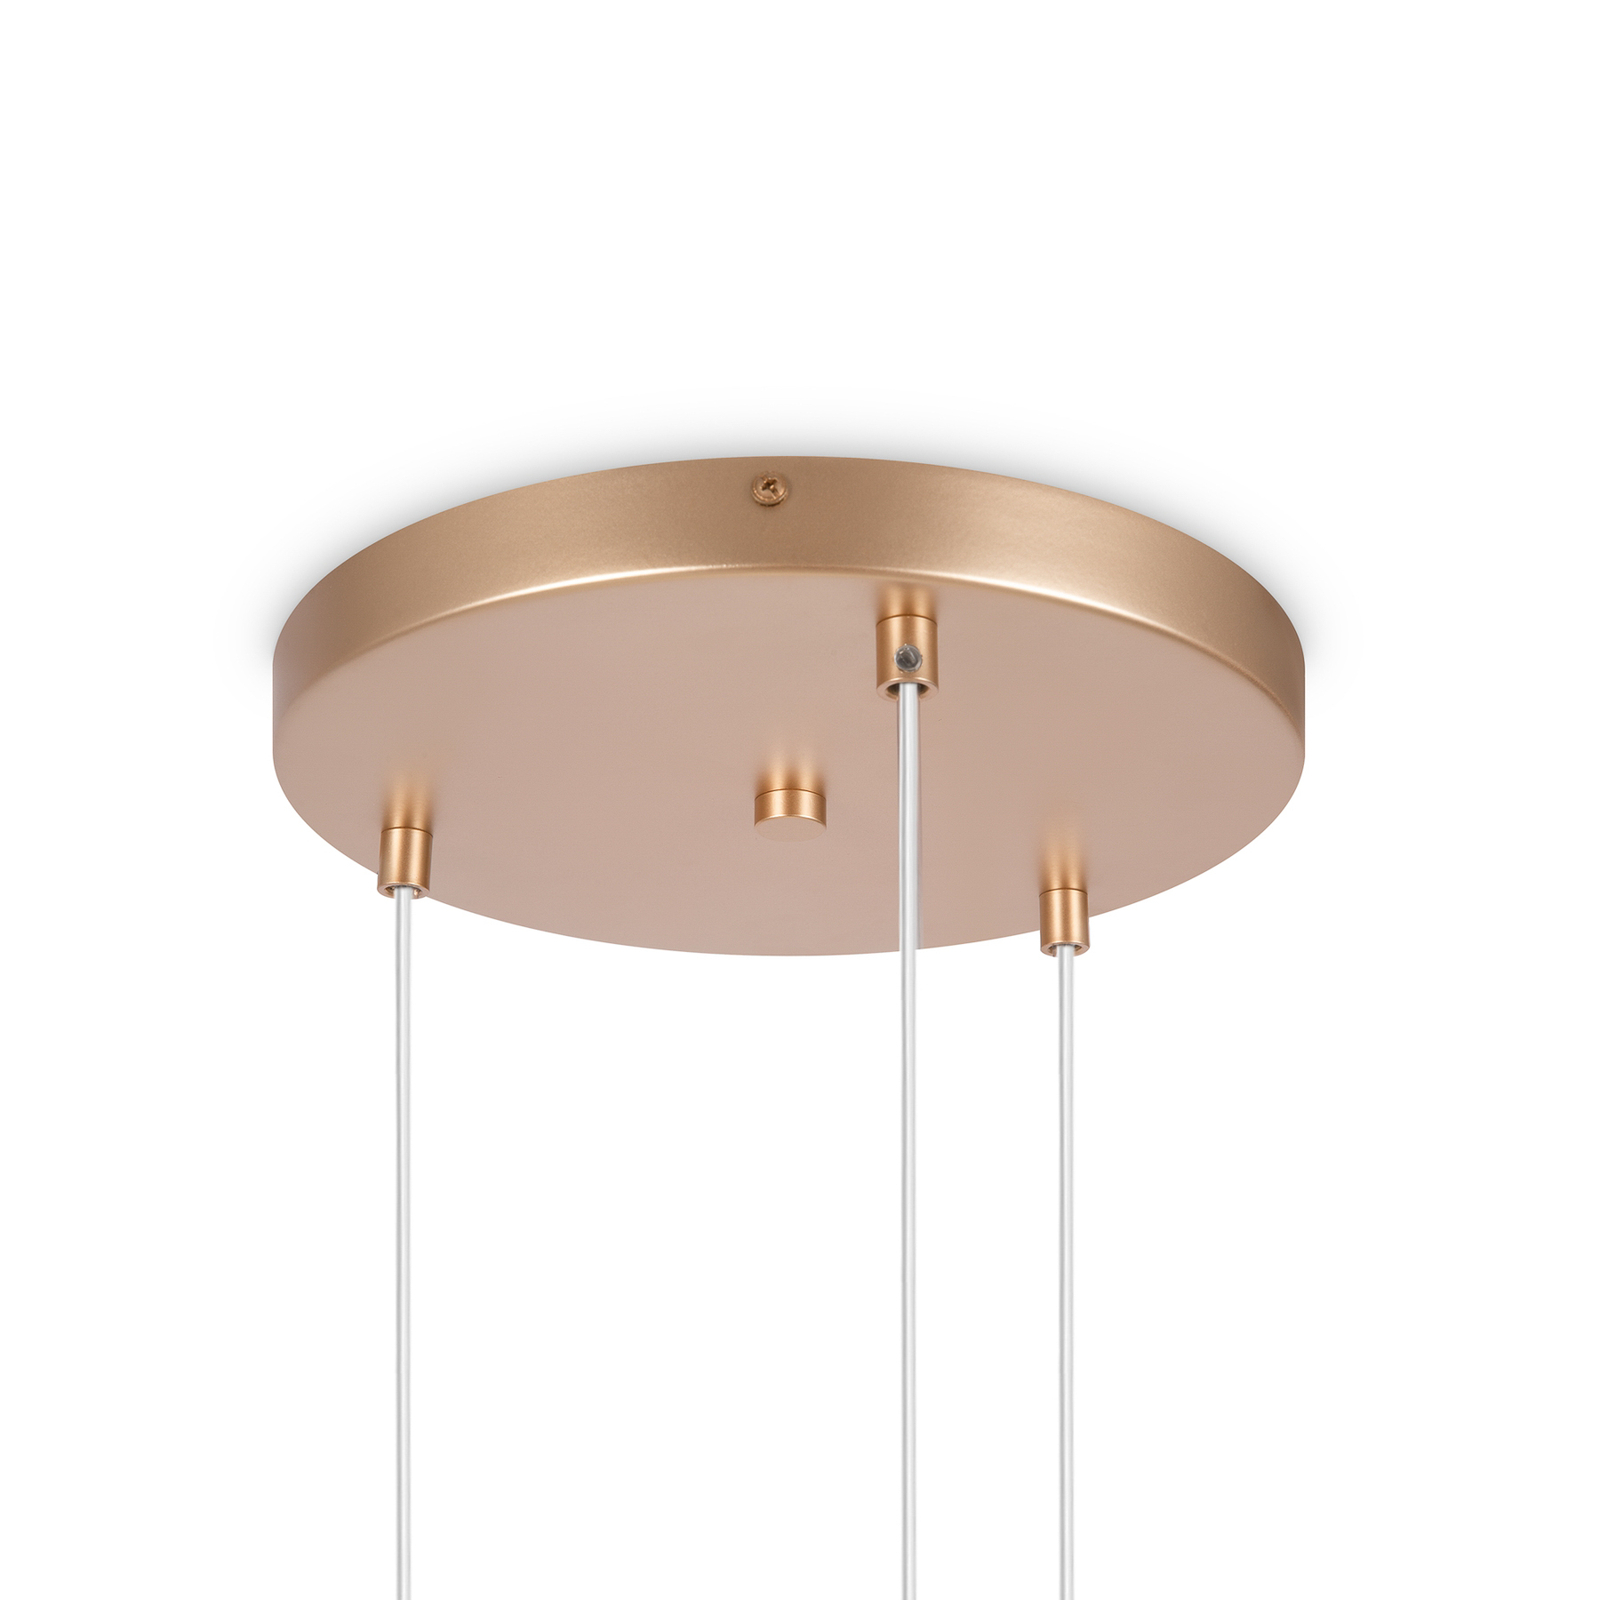 Maytoni hanglamp Basic vorm, wit/goud, 3-lamps.